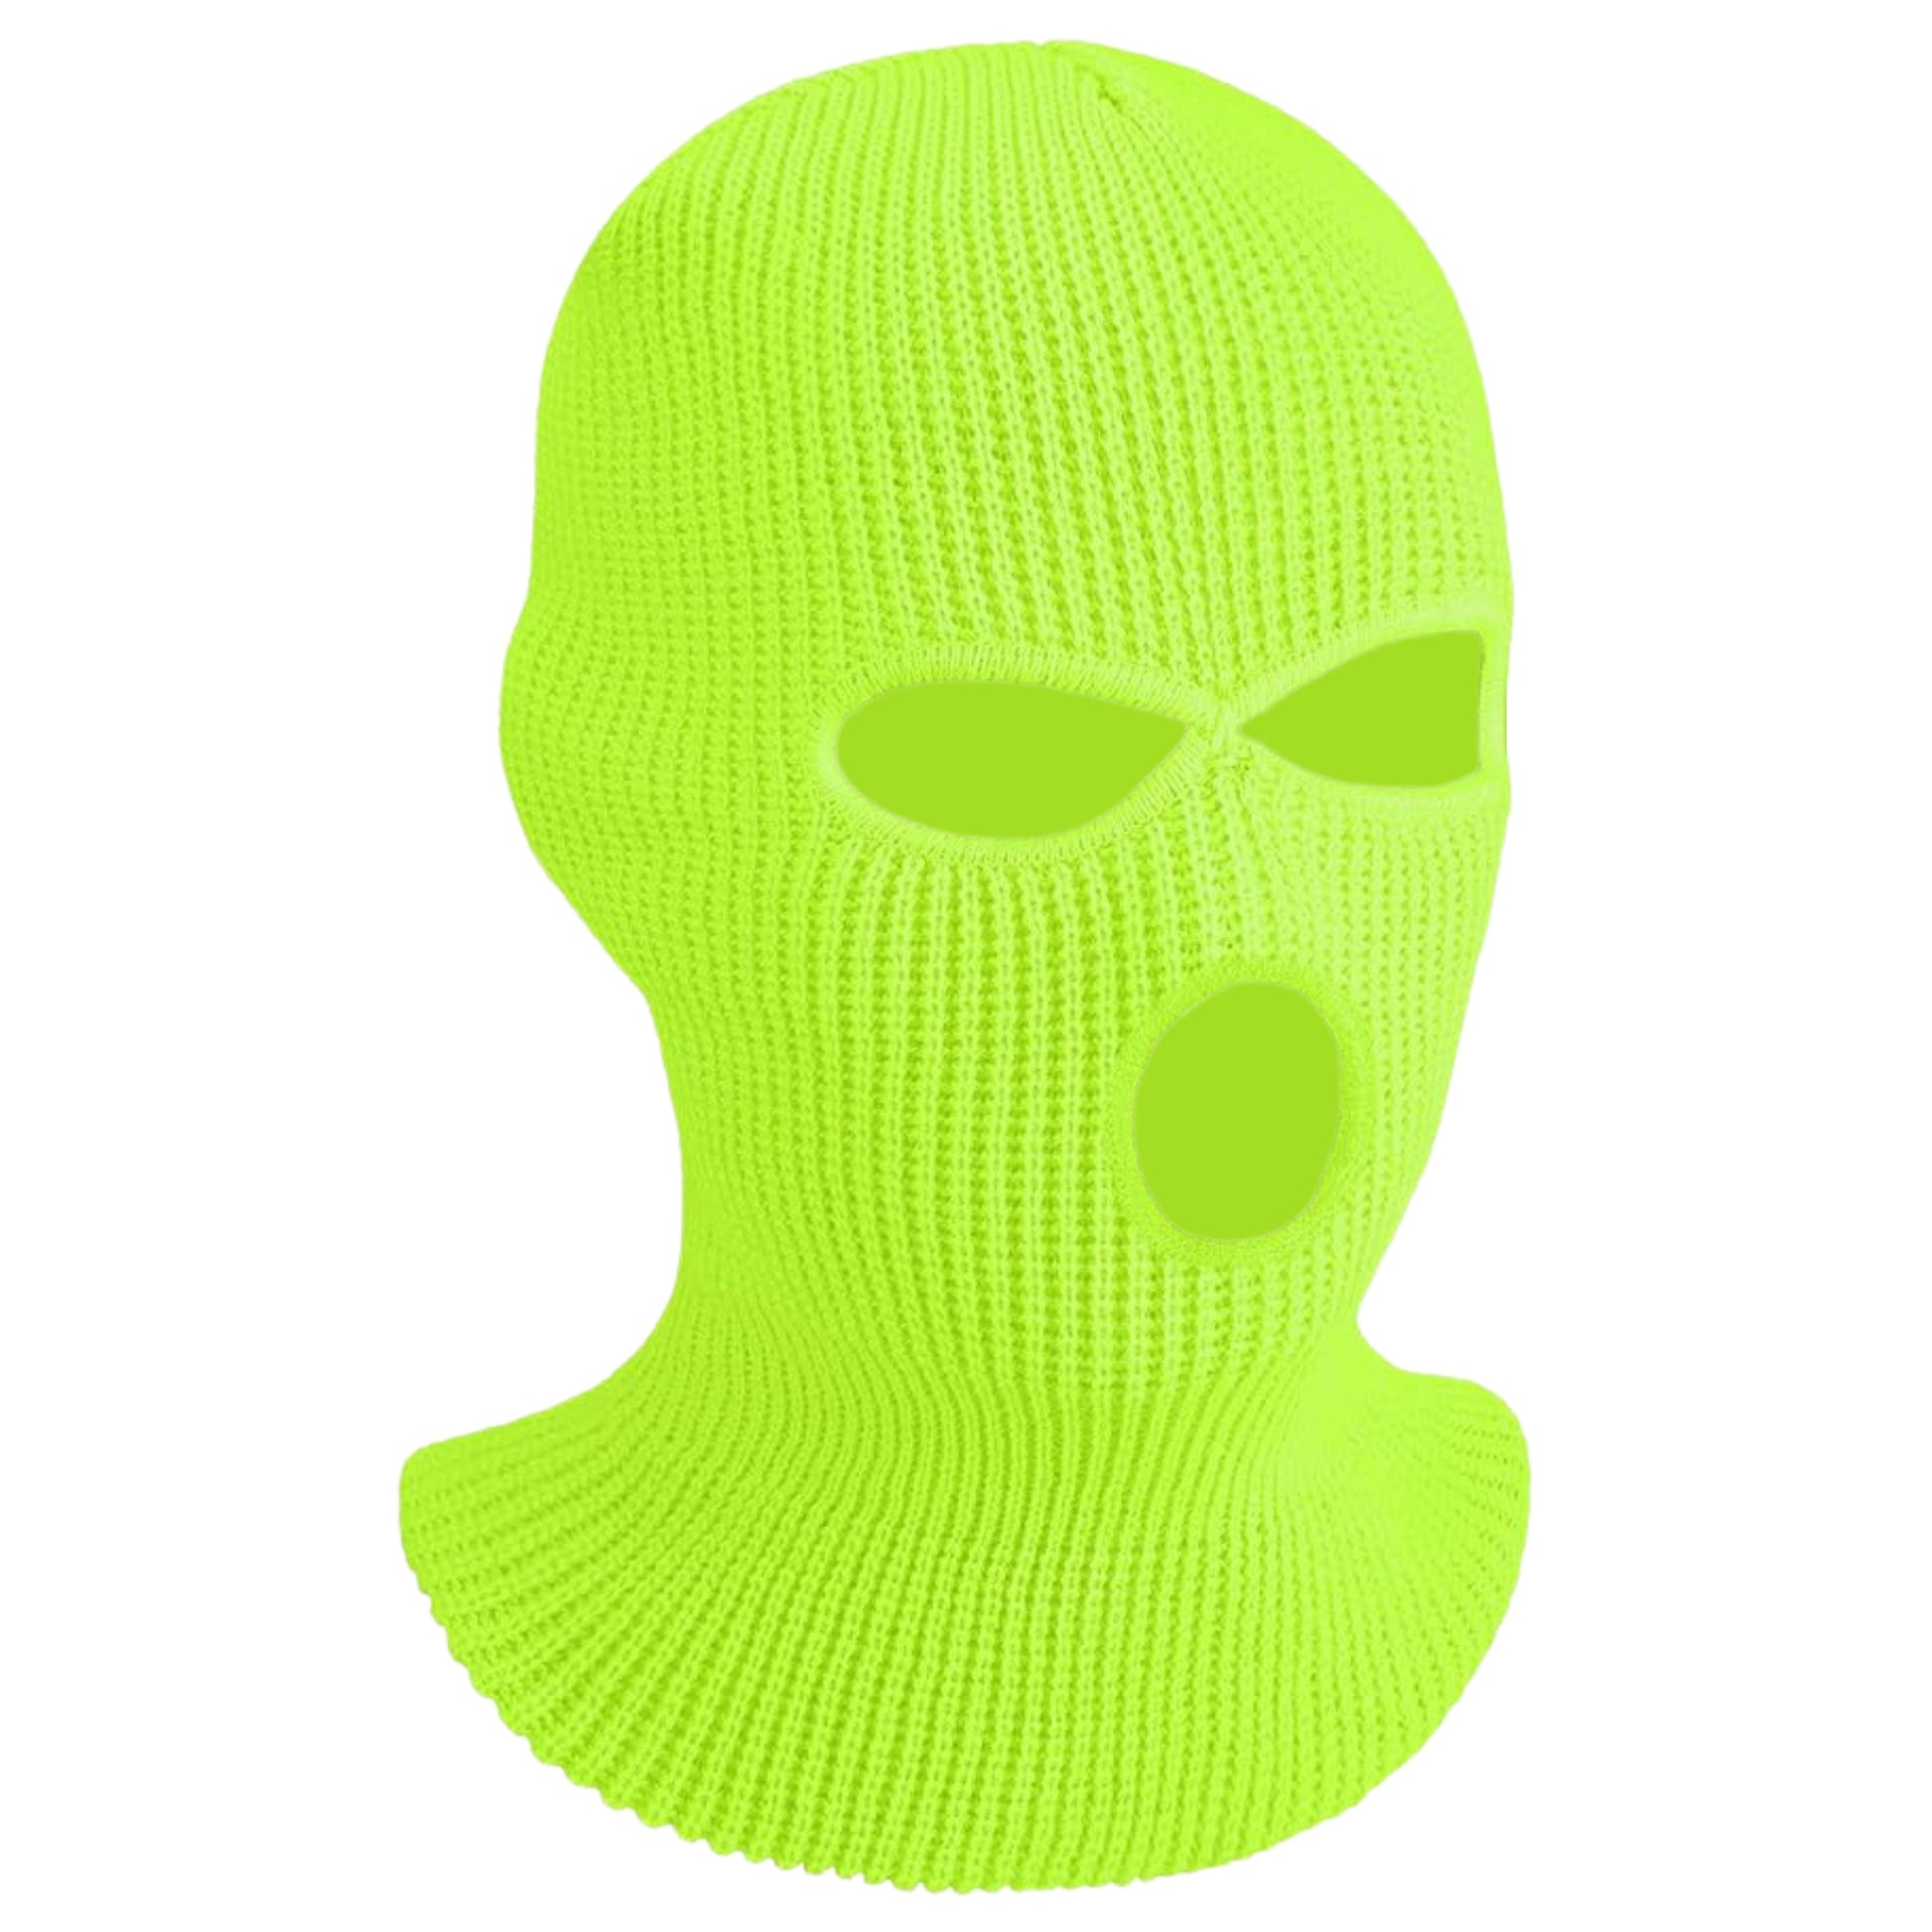 neon yellow ski mask